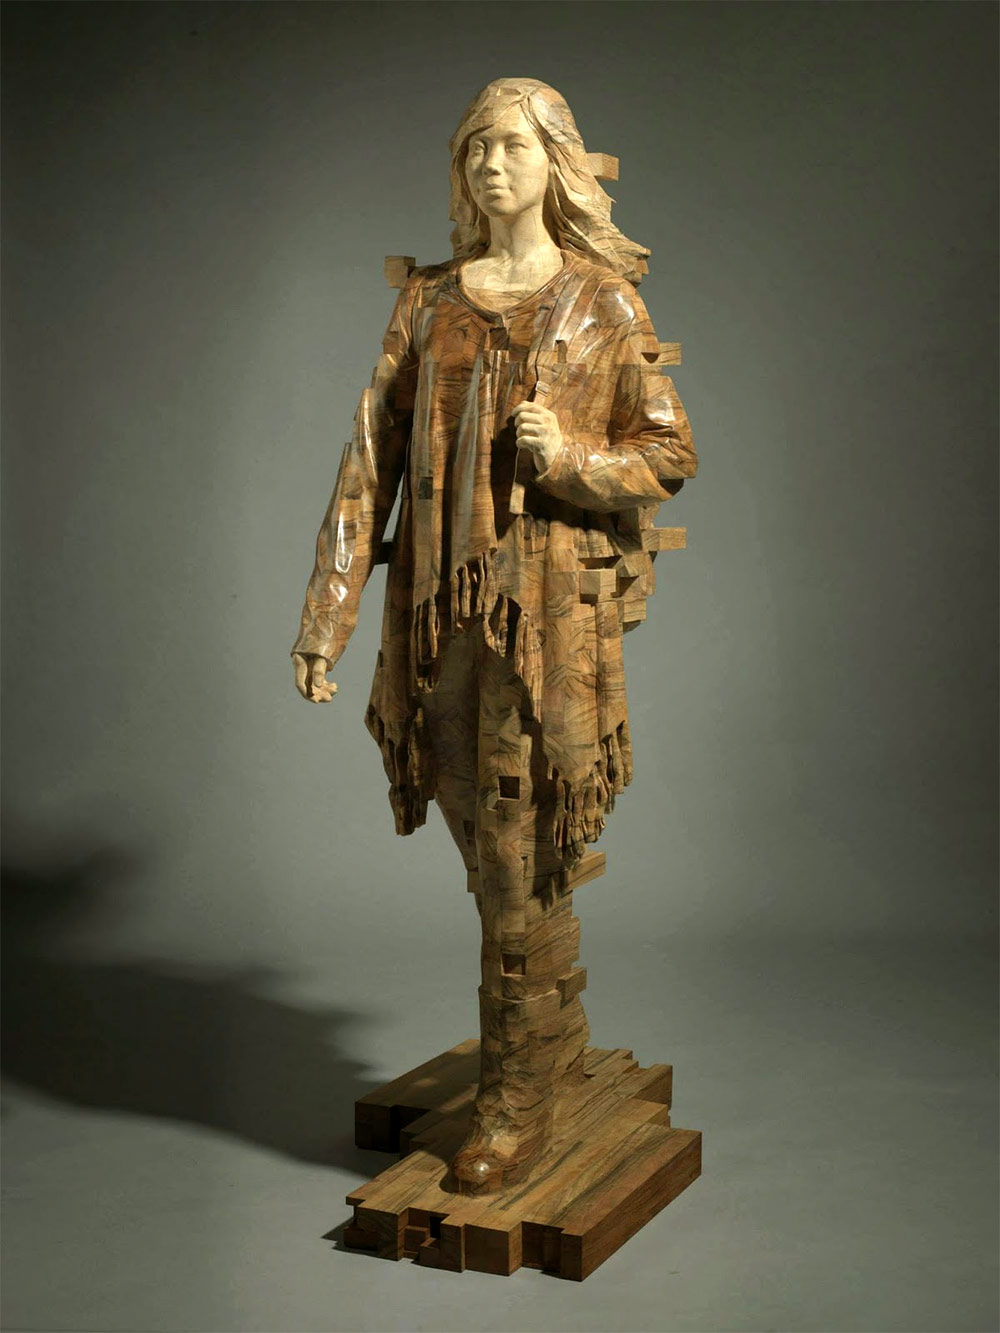 Splendid Wood Sculptures Of Pixelated Figures By Hsu Tung Han 14